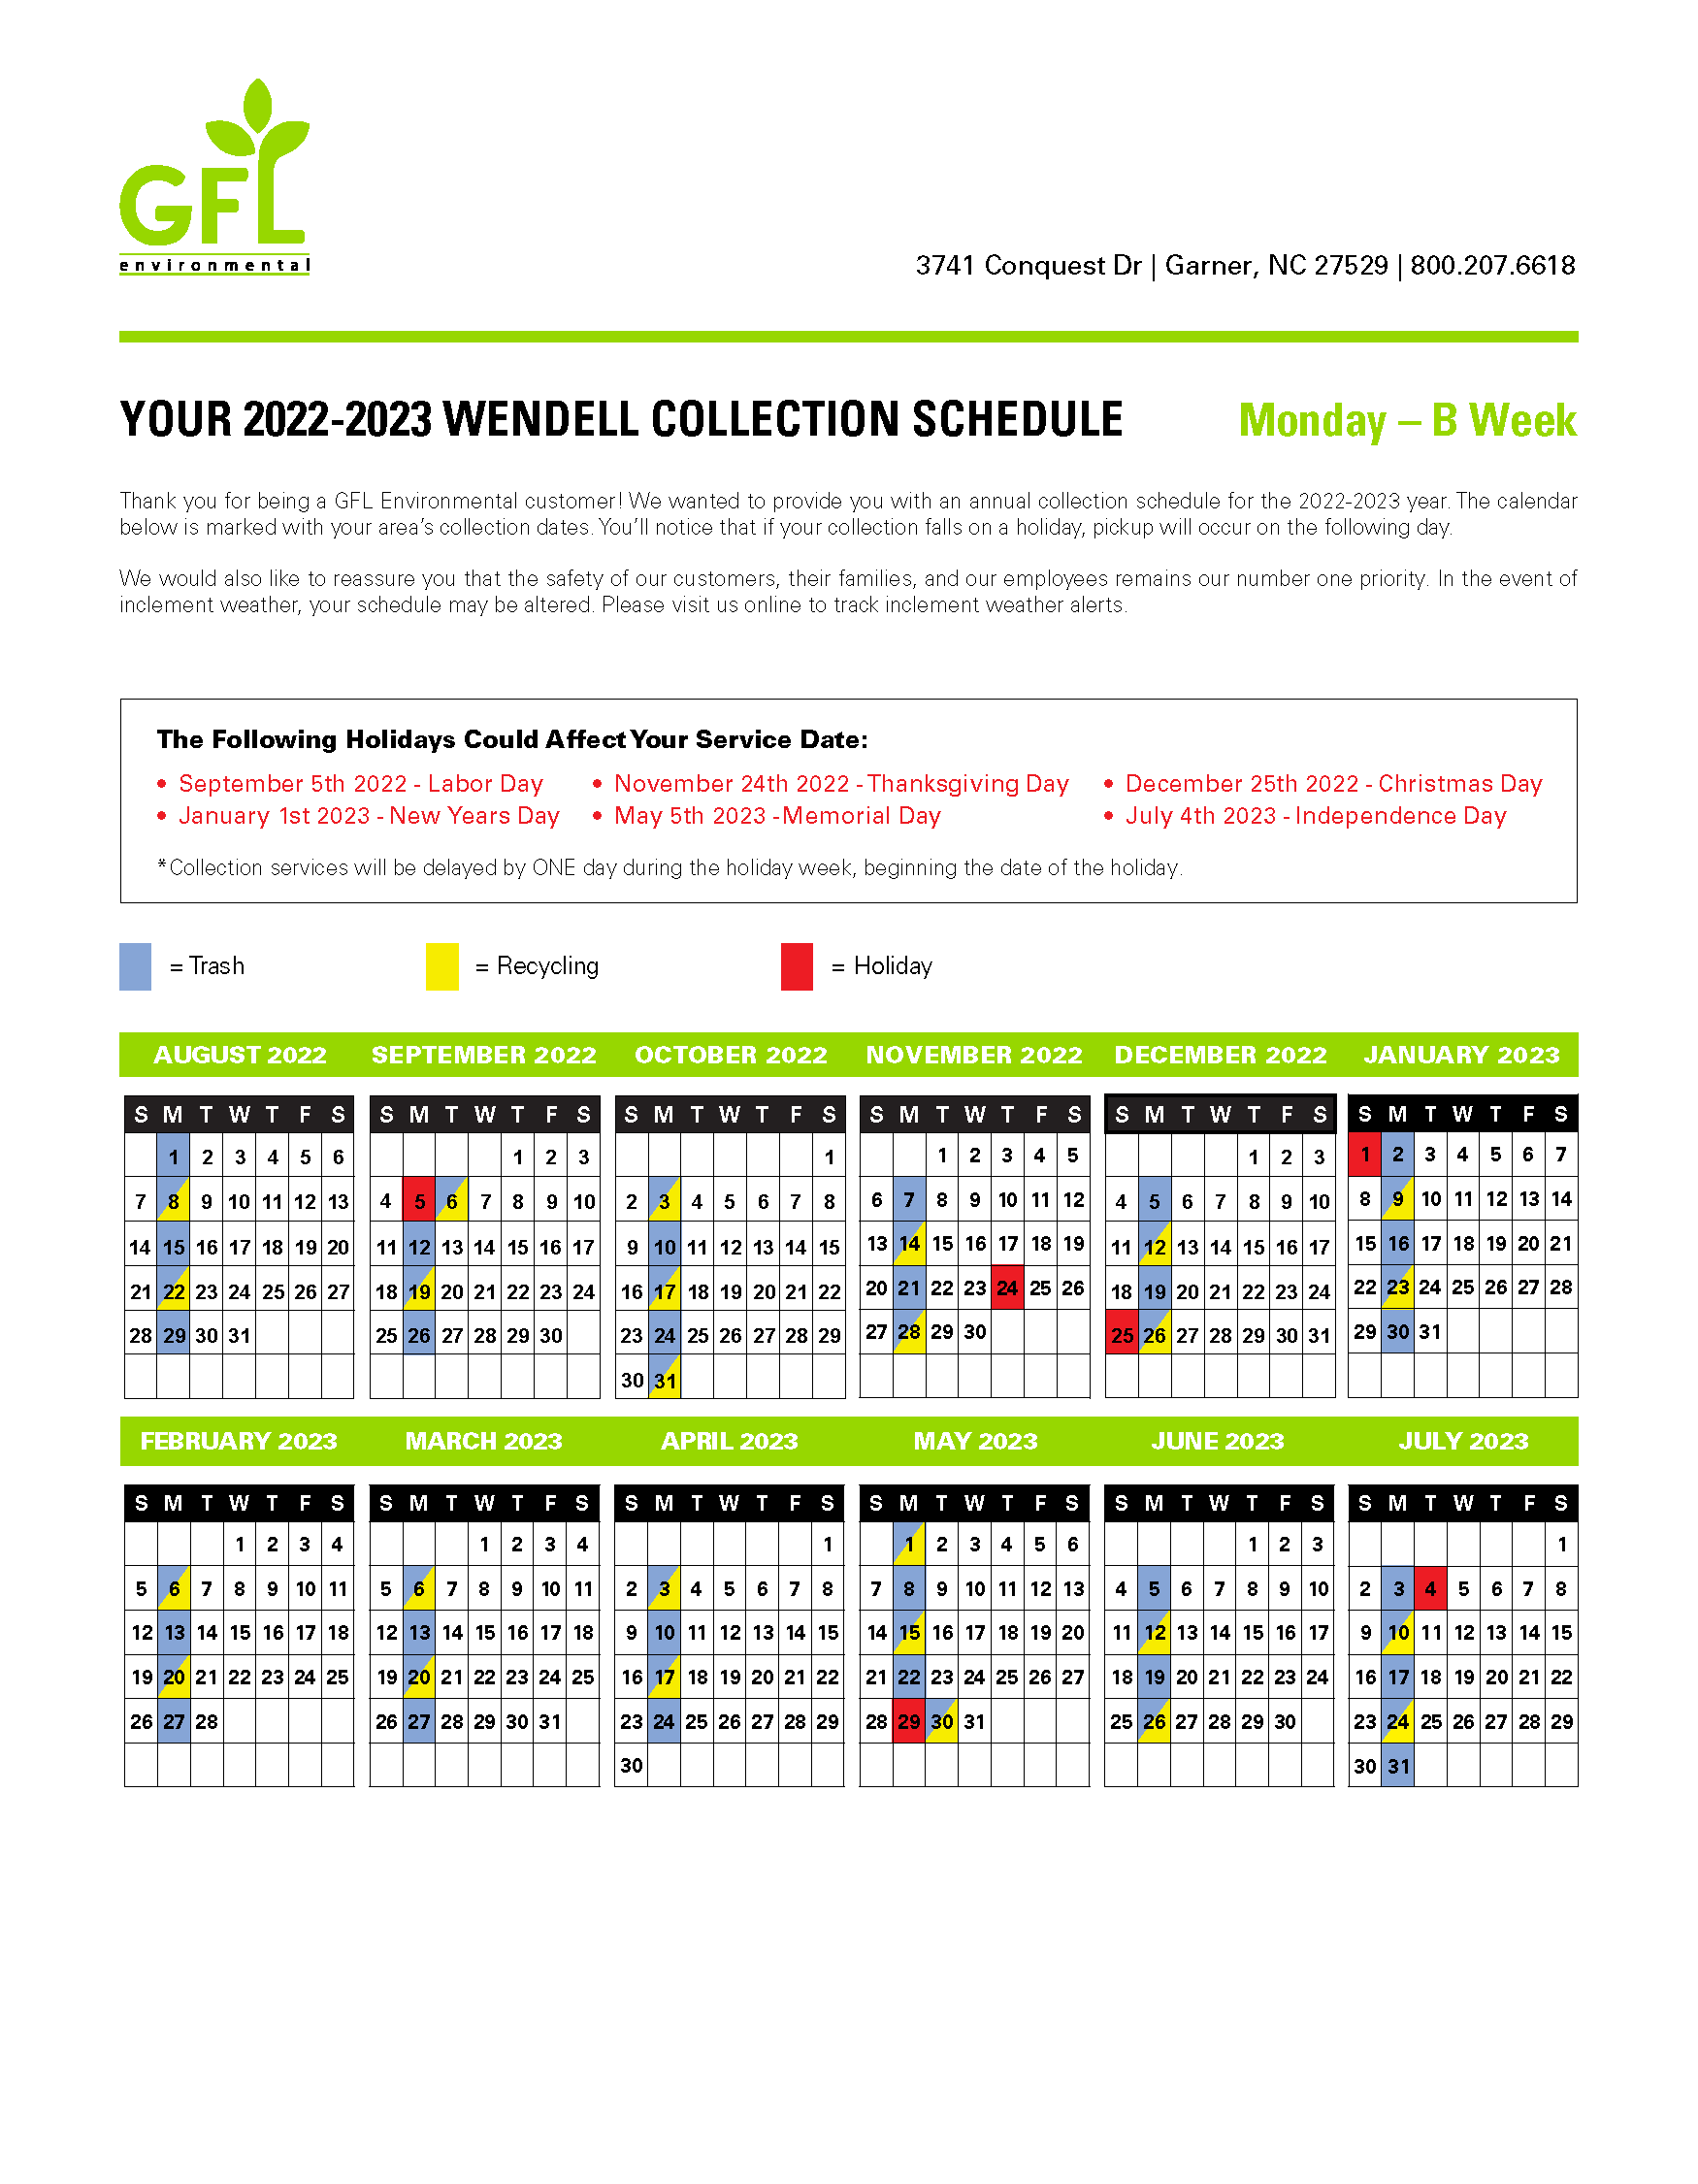 Monday B-Week Waste Collection Calendar 